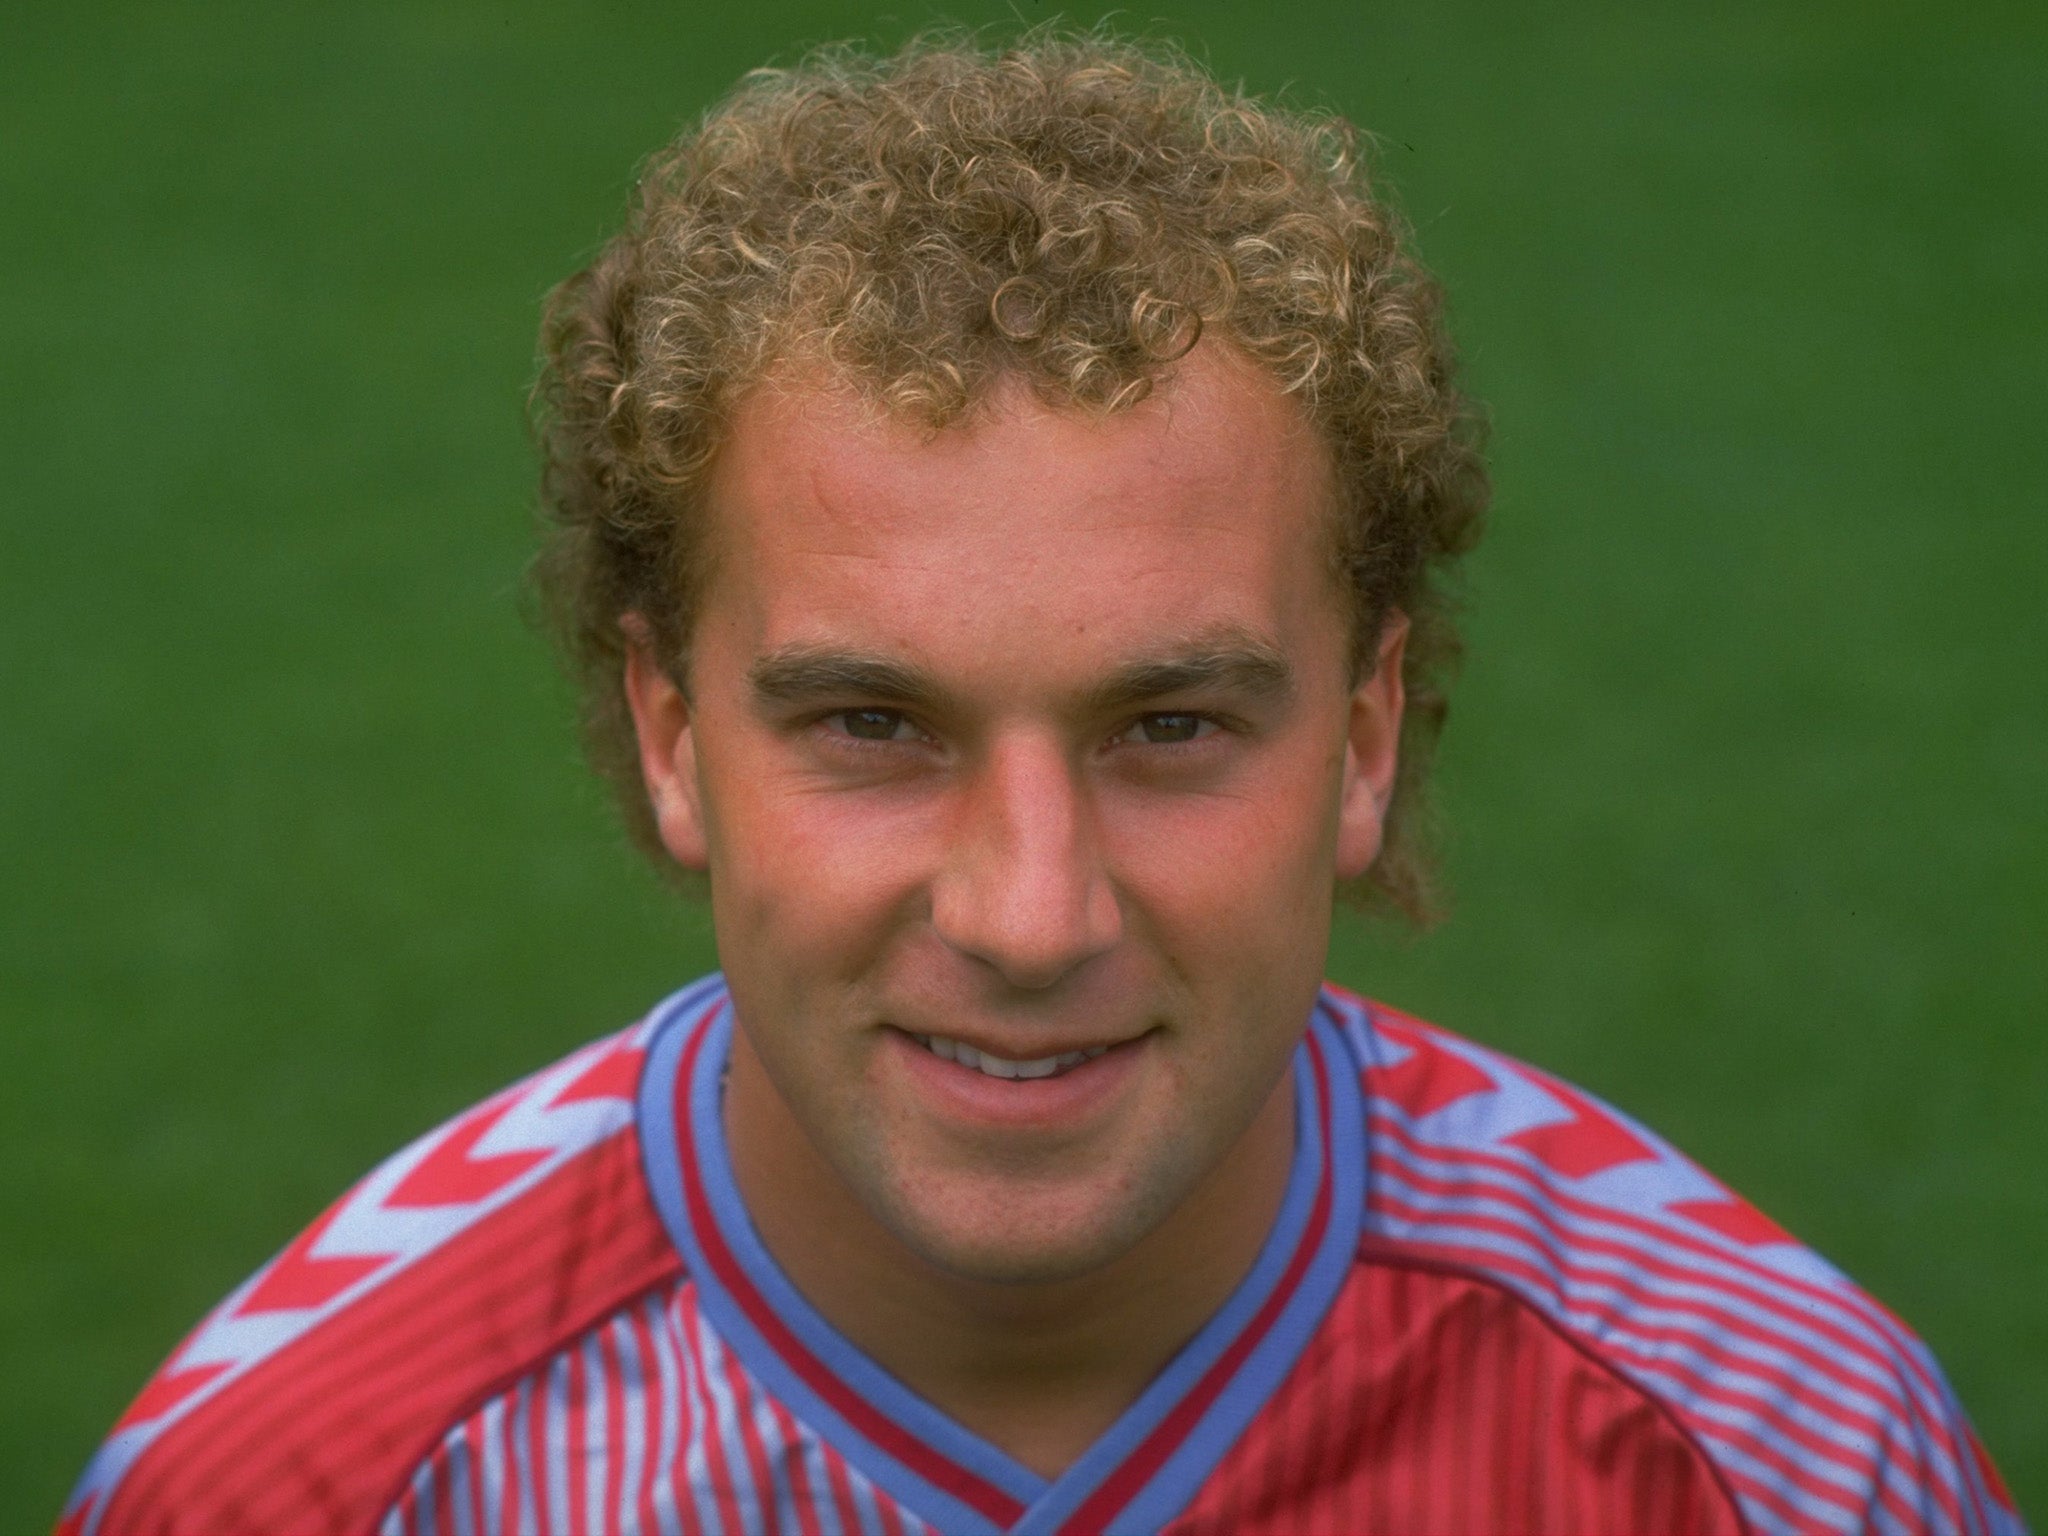 Cooper at Aston Villa in 1987